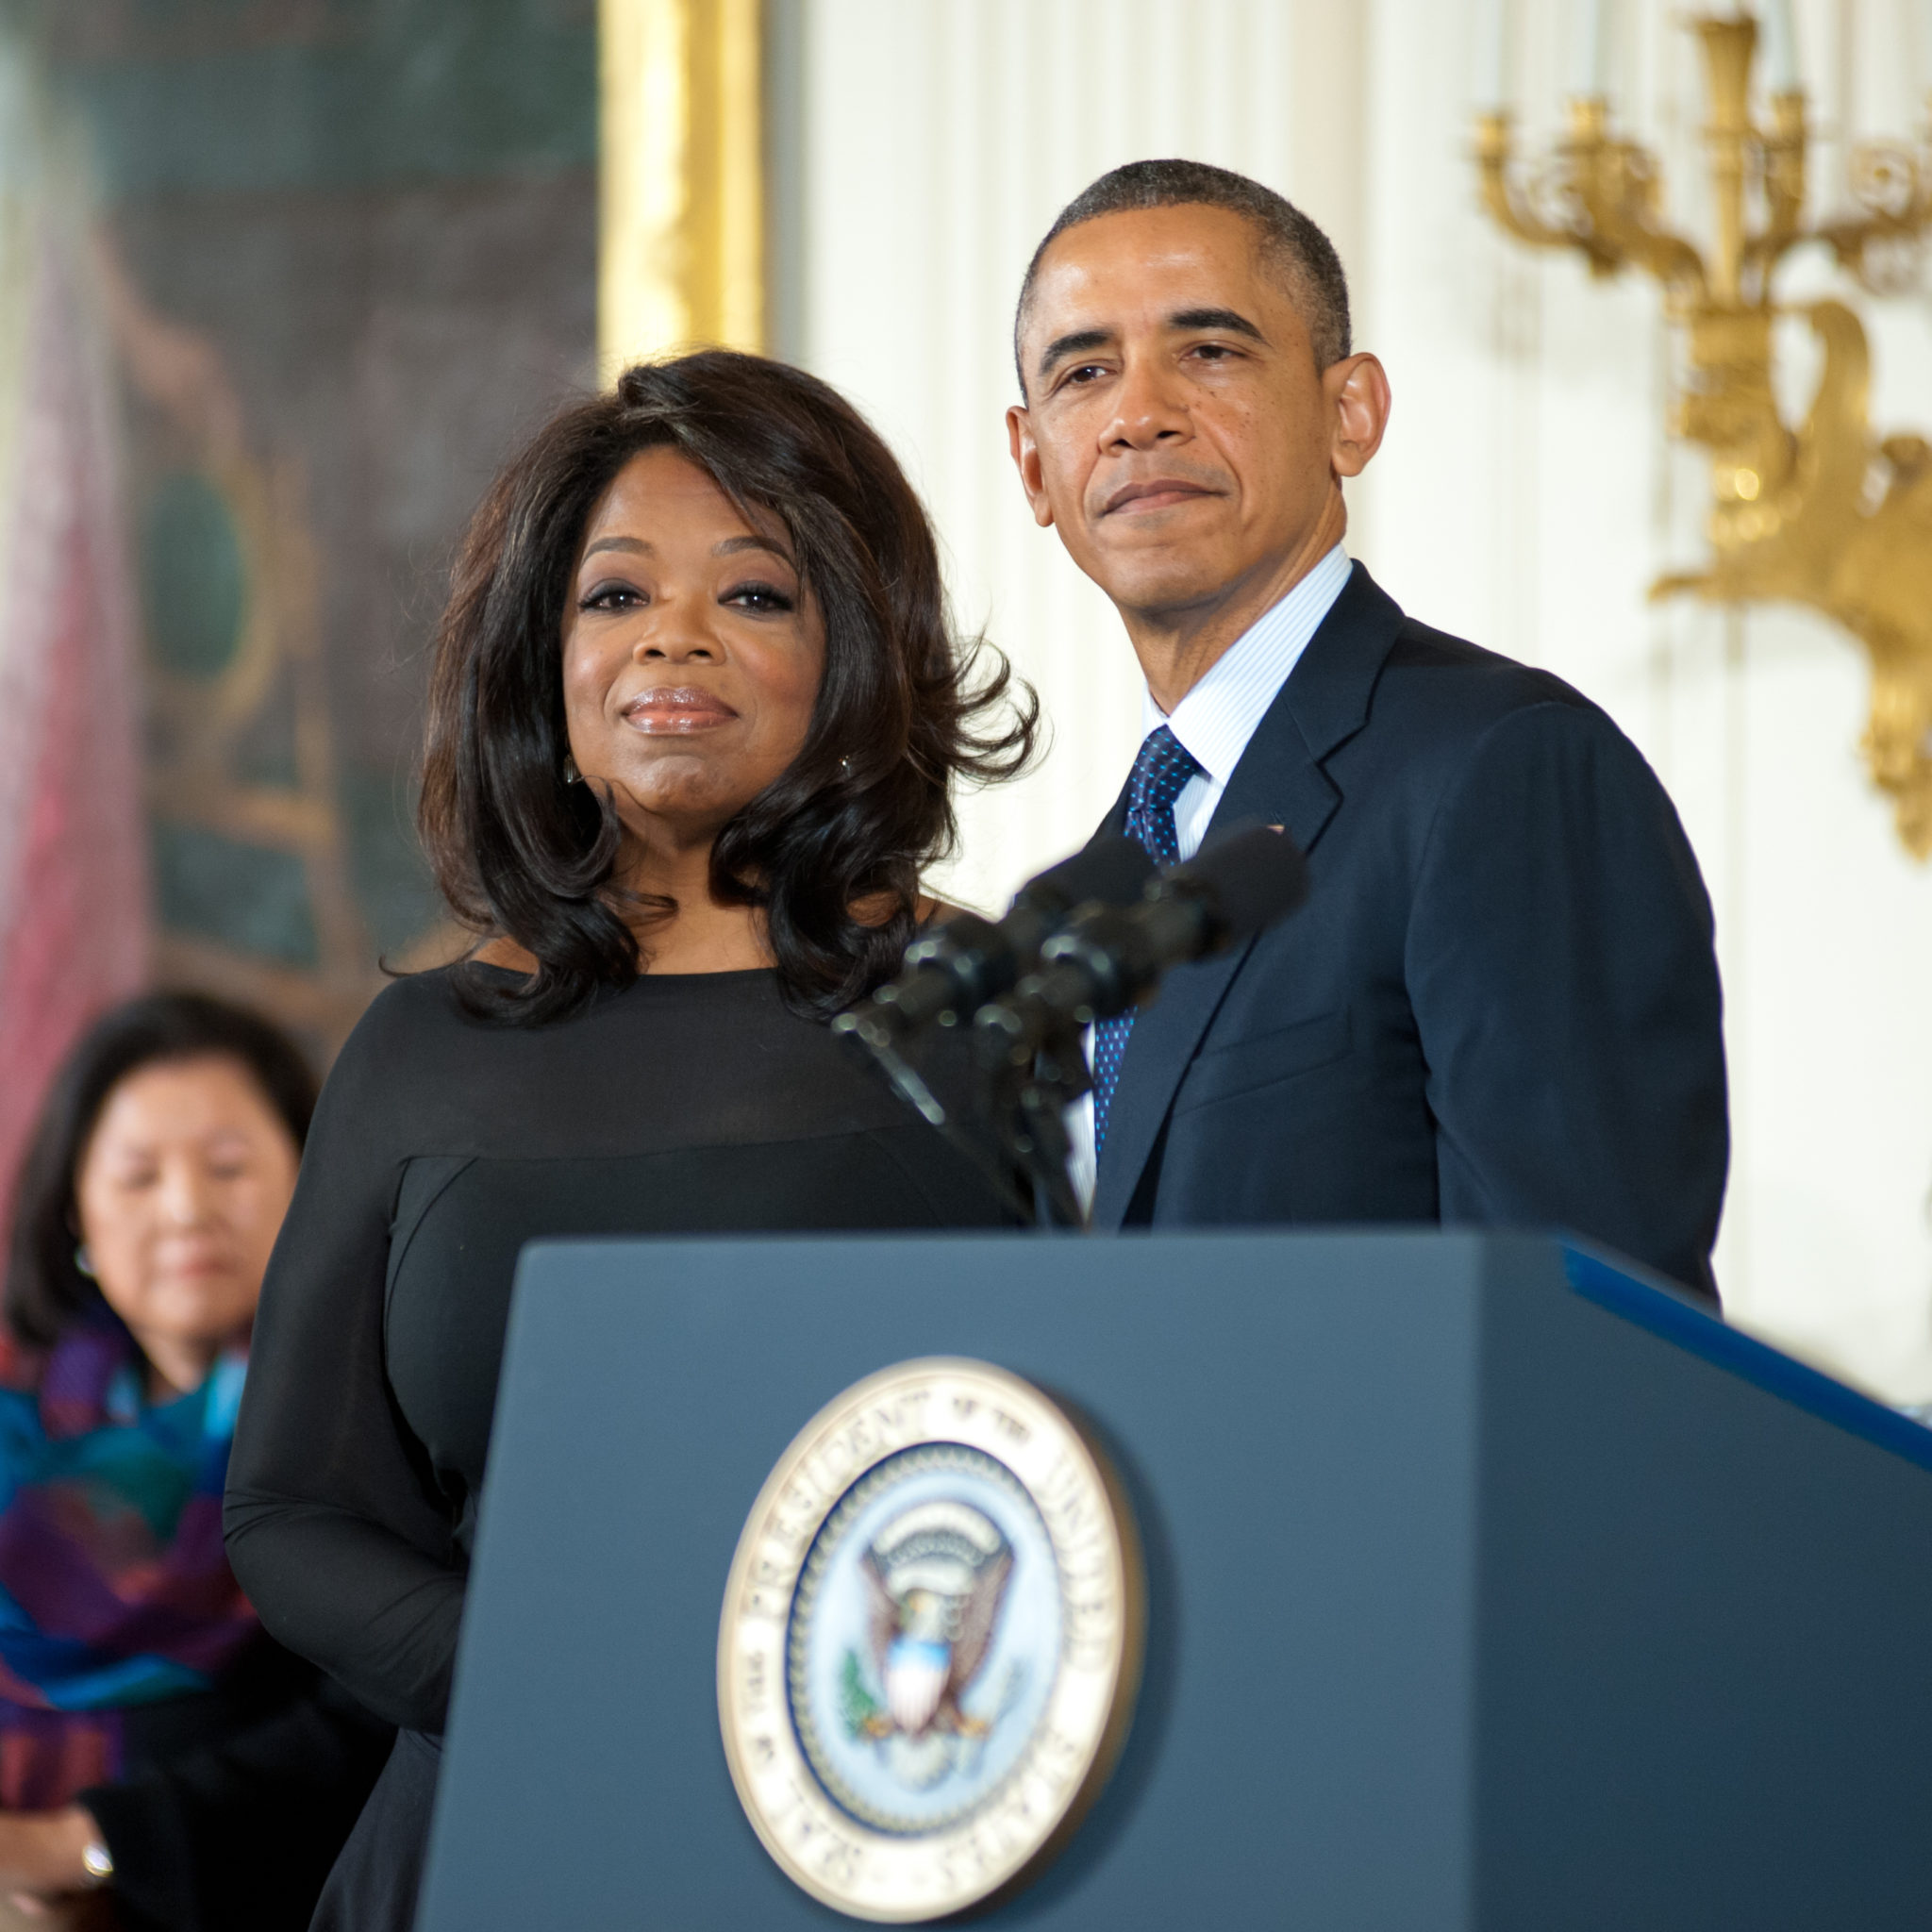 Oprah and President Obama